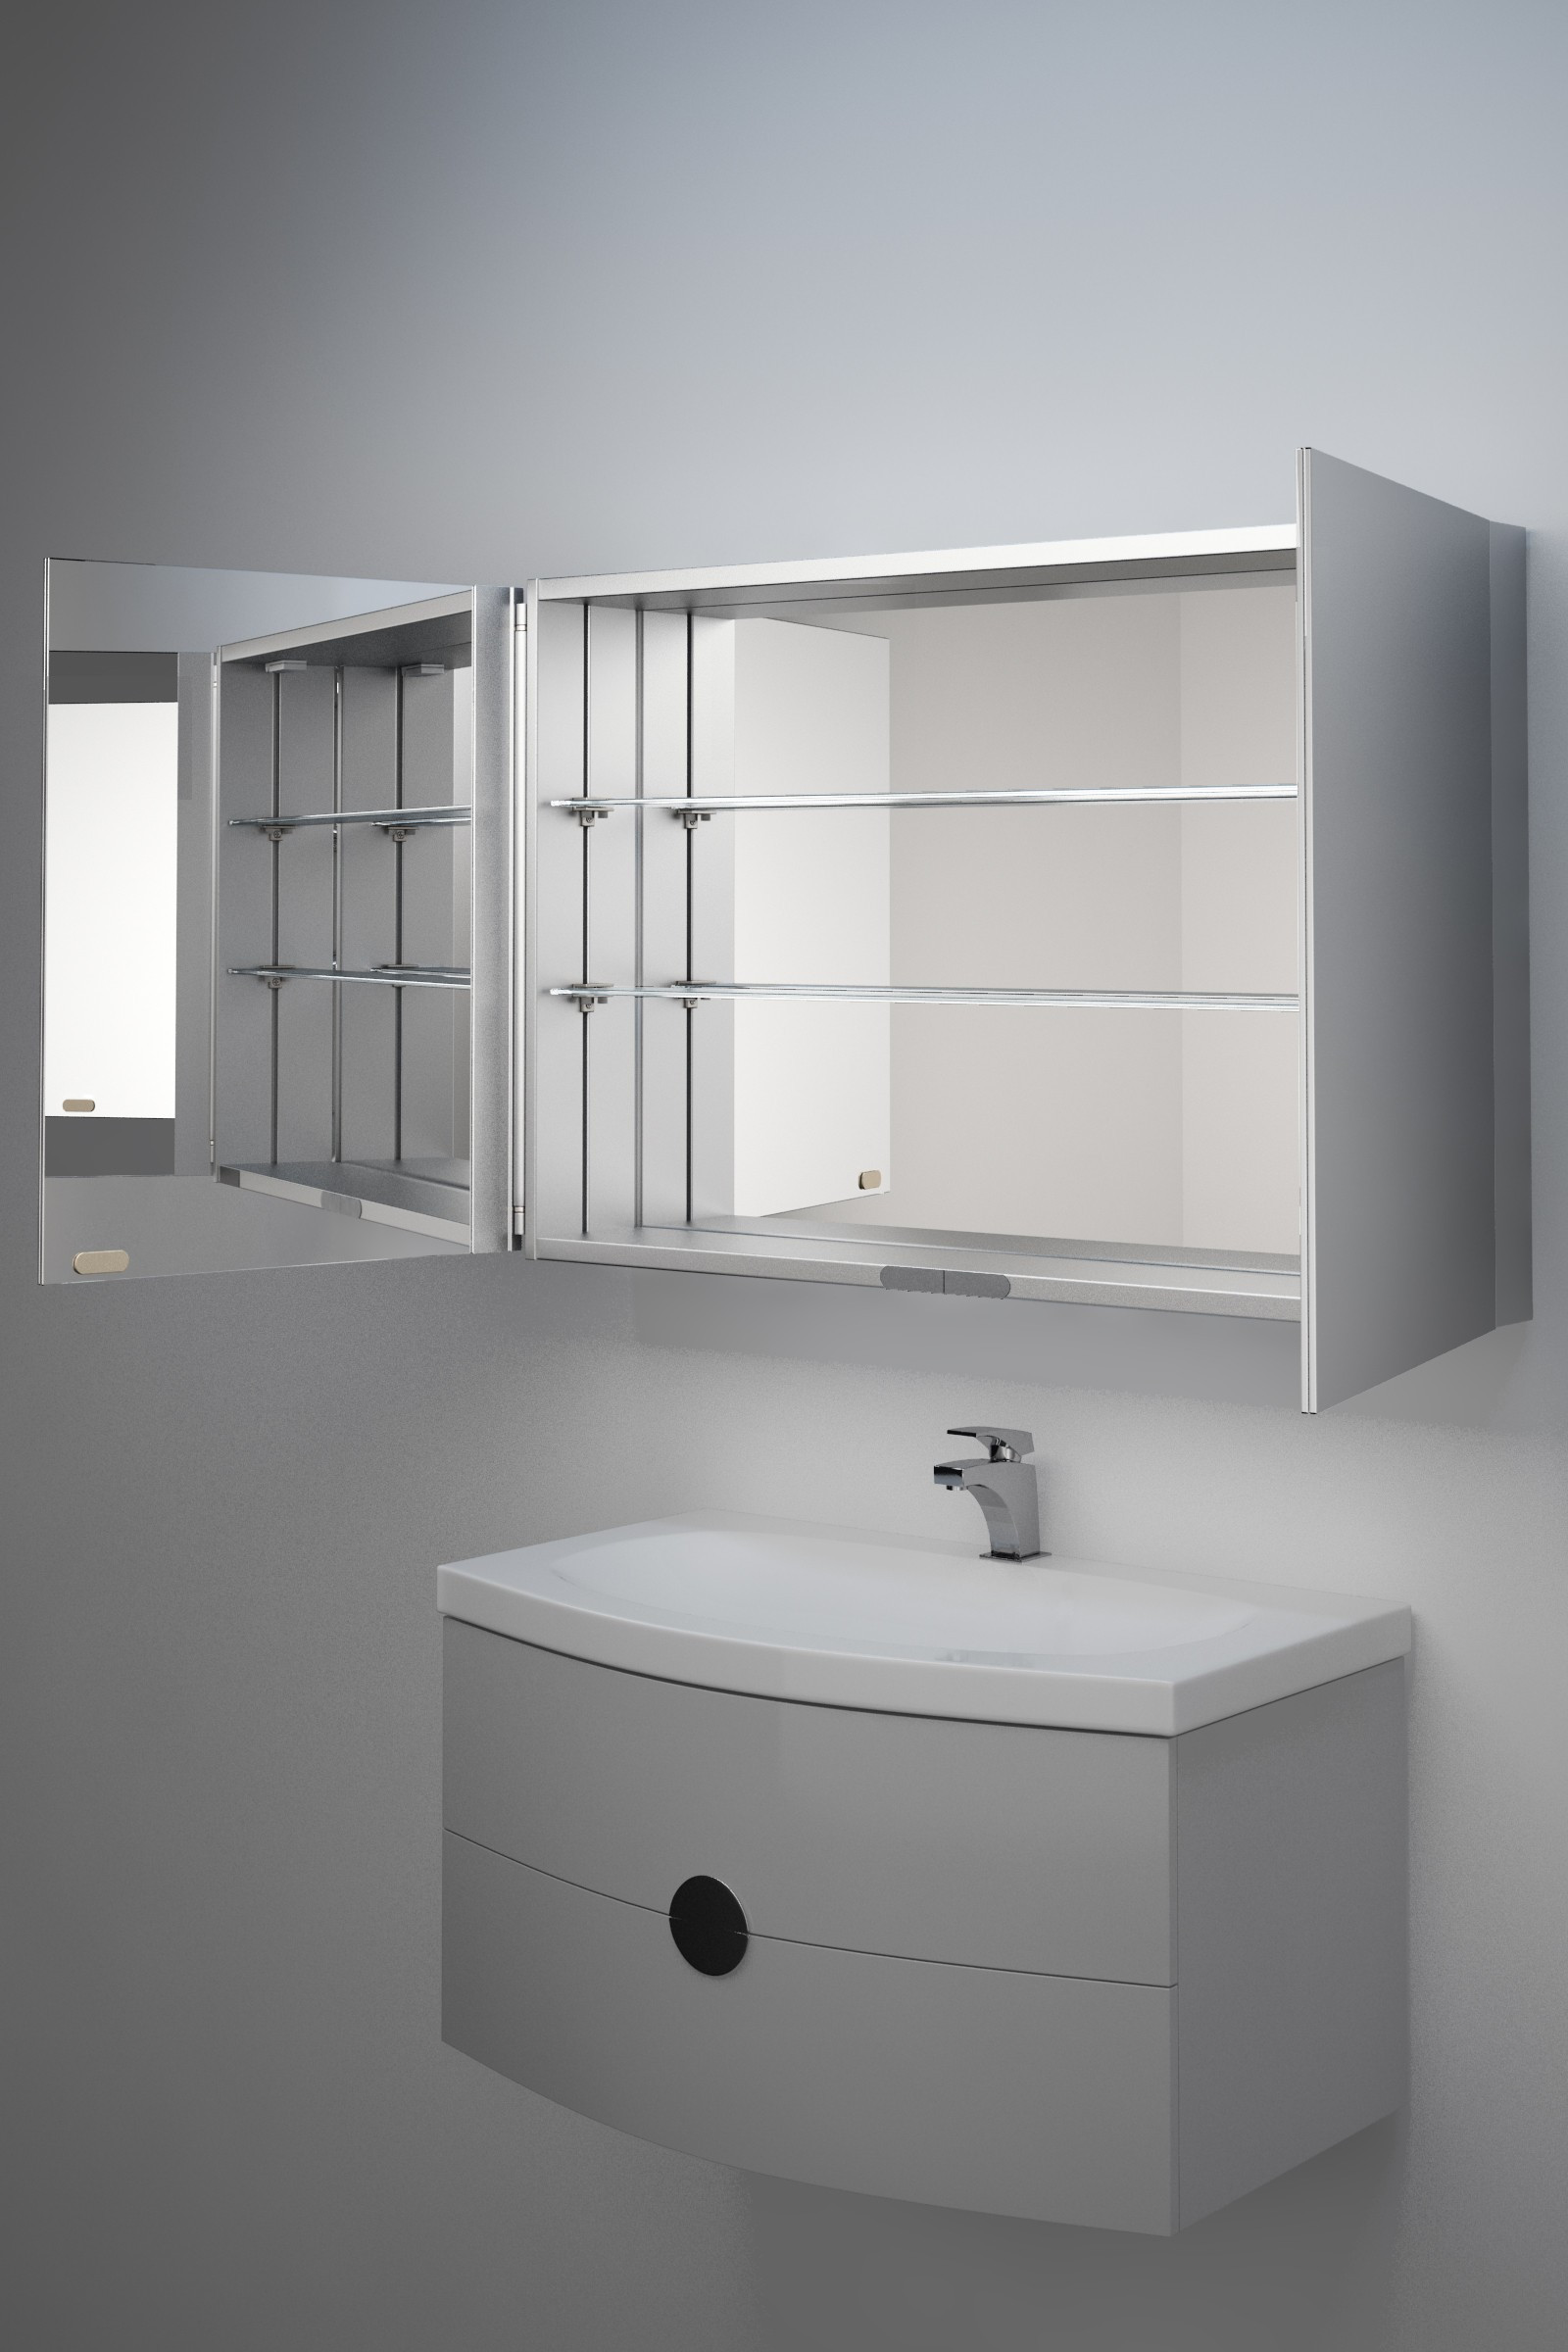 Mirrored Bathroom Cabinet
 Jasmin mirrored bathroom cabinet H 600mm x W 900mm x D